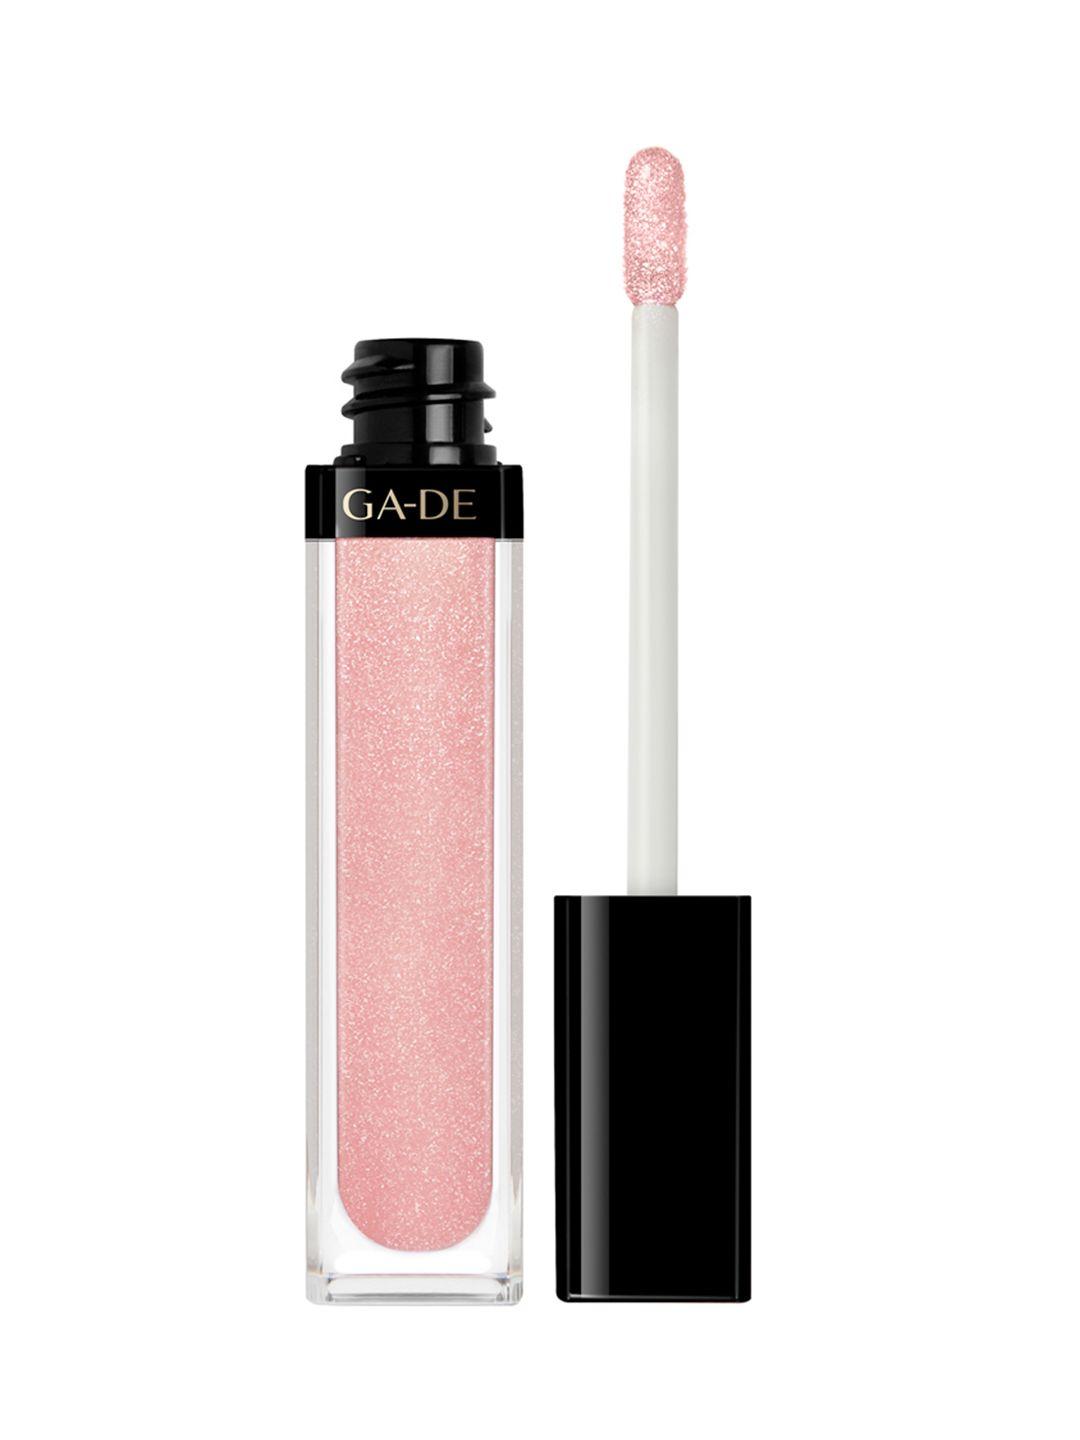 ga-de long lasting & moisturizing crystal lights lip gloss 6ml - rose glitz 823